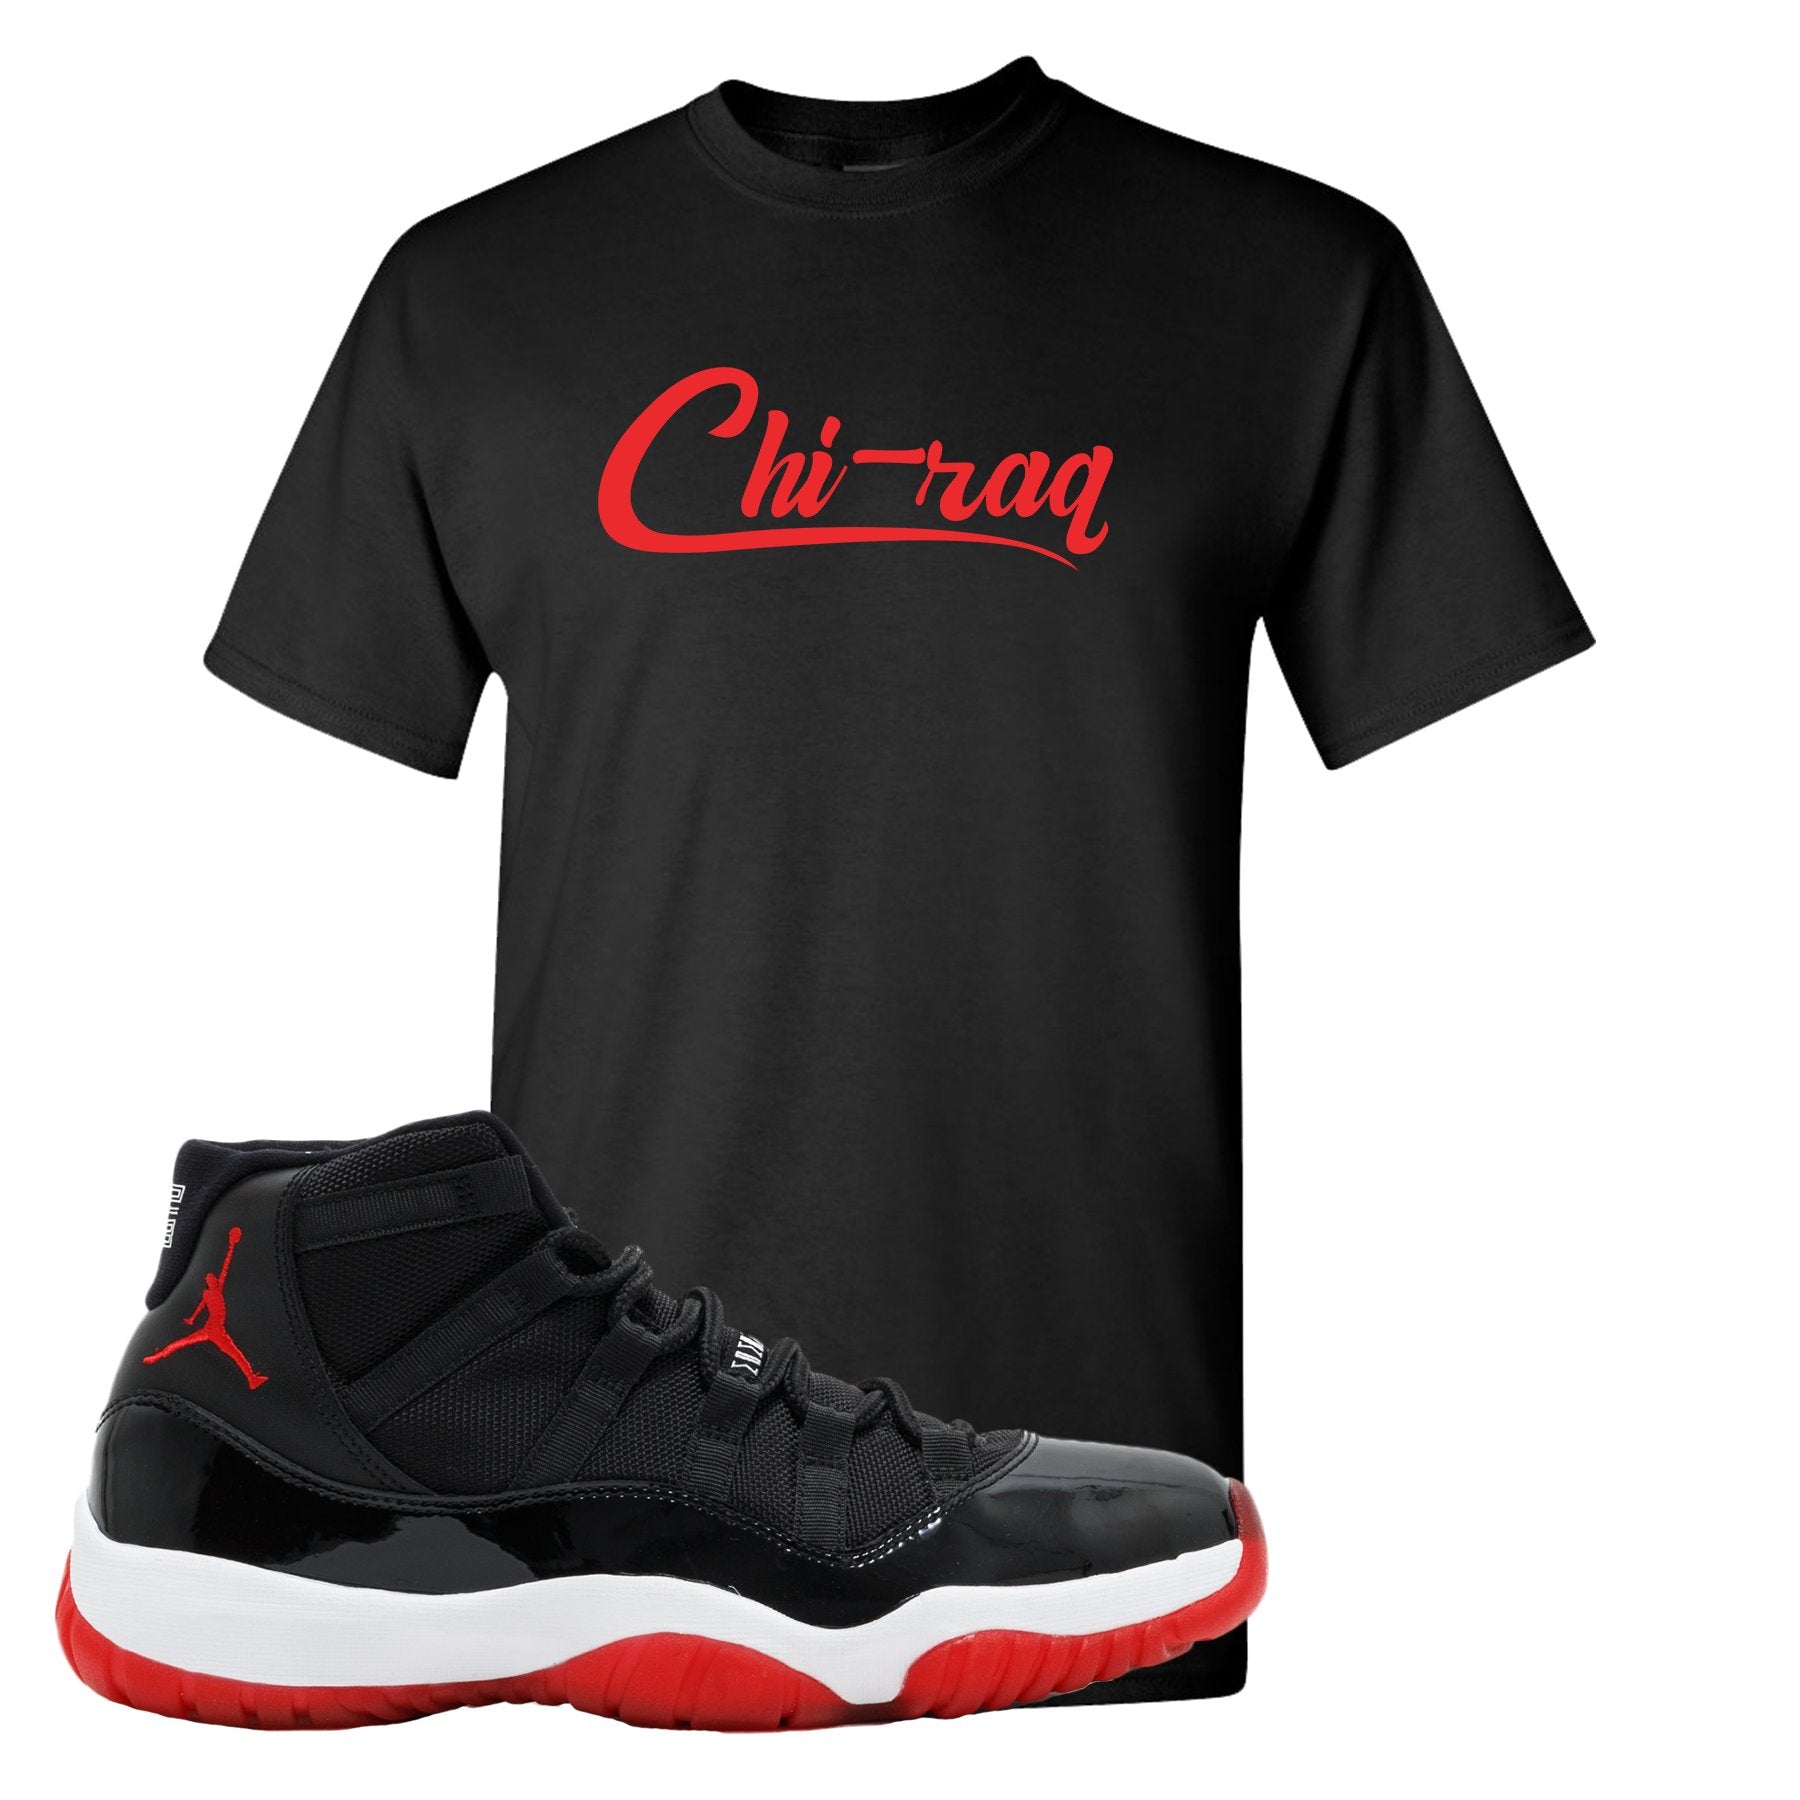 Jordan 11 Bred Chi-raq Black Sneaker Hook Up T-Shirt